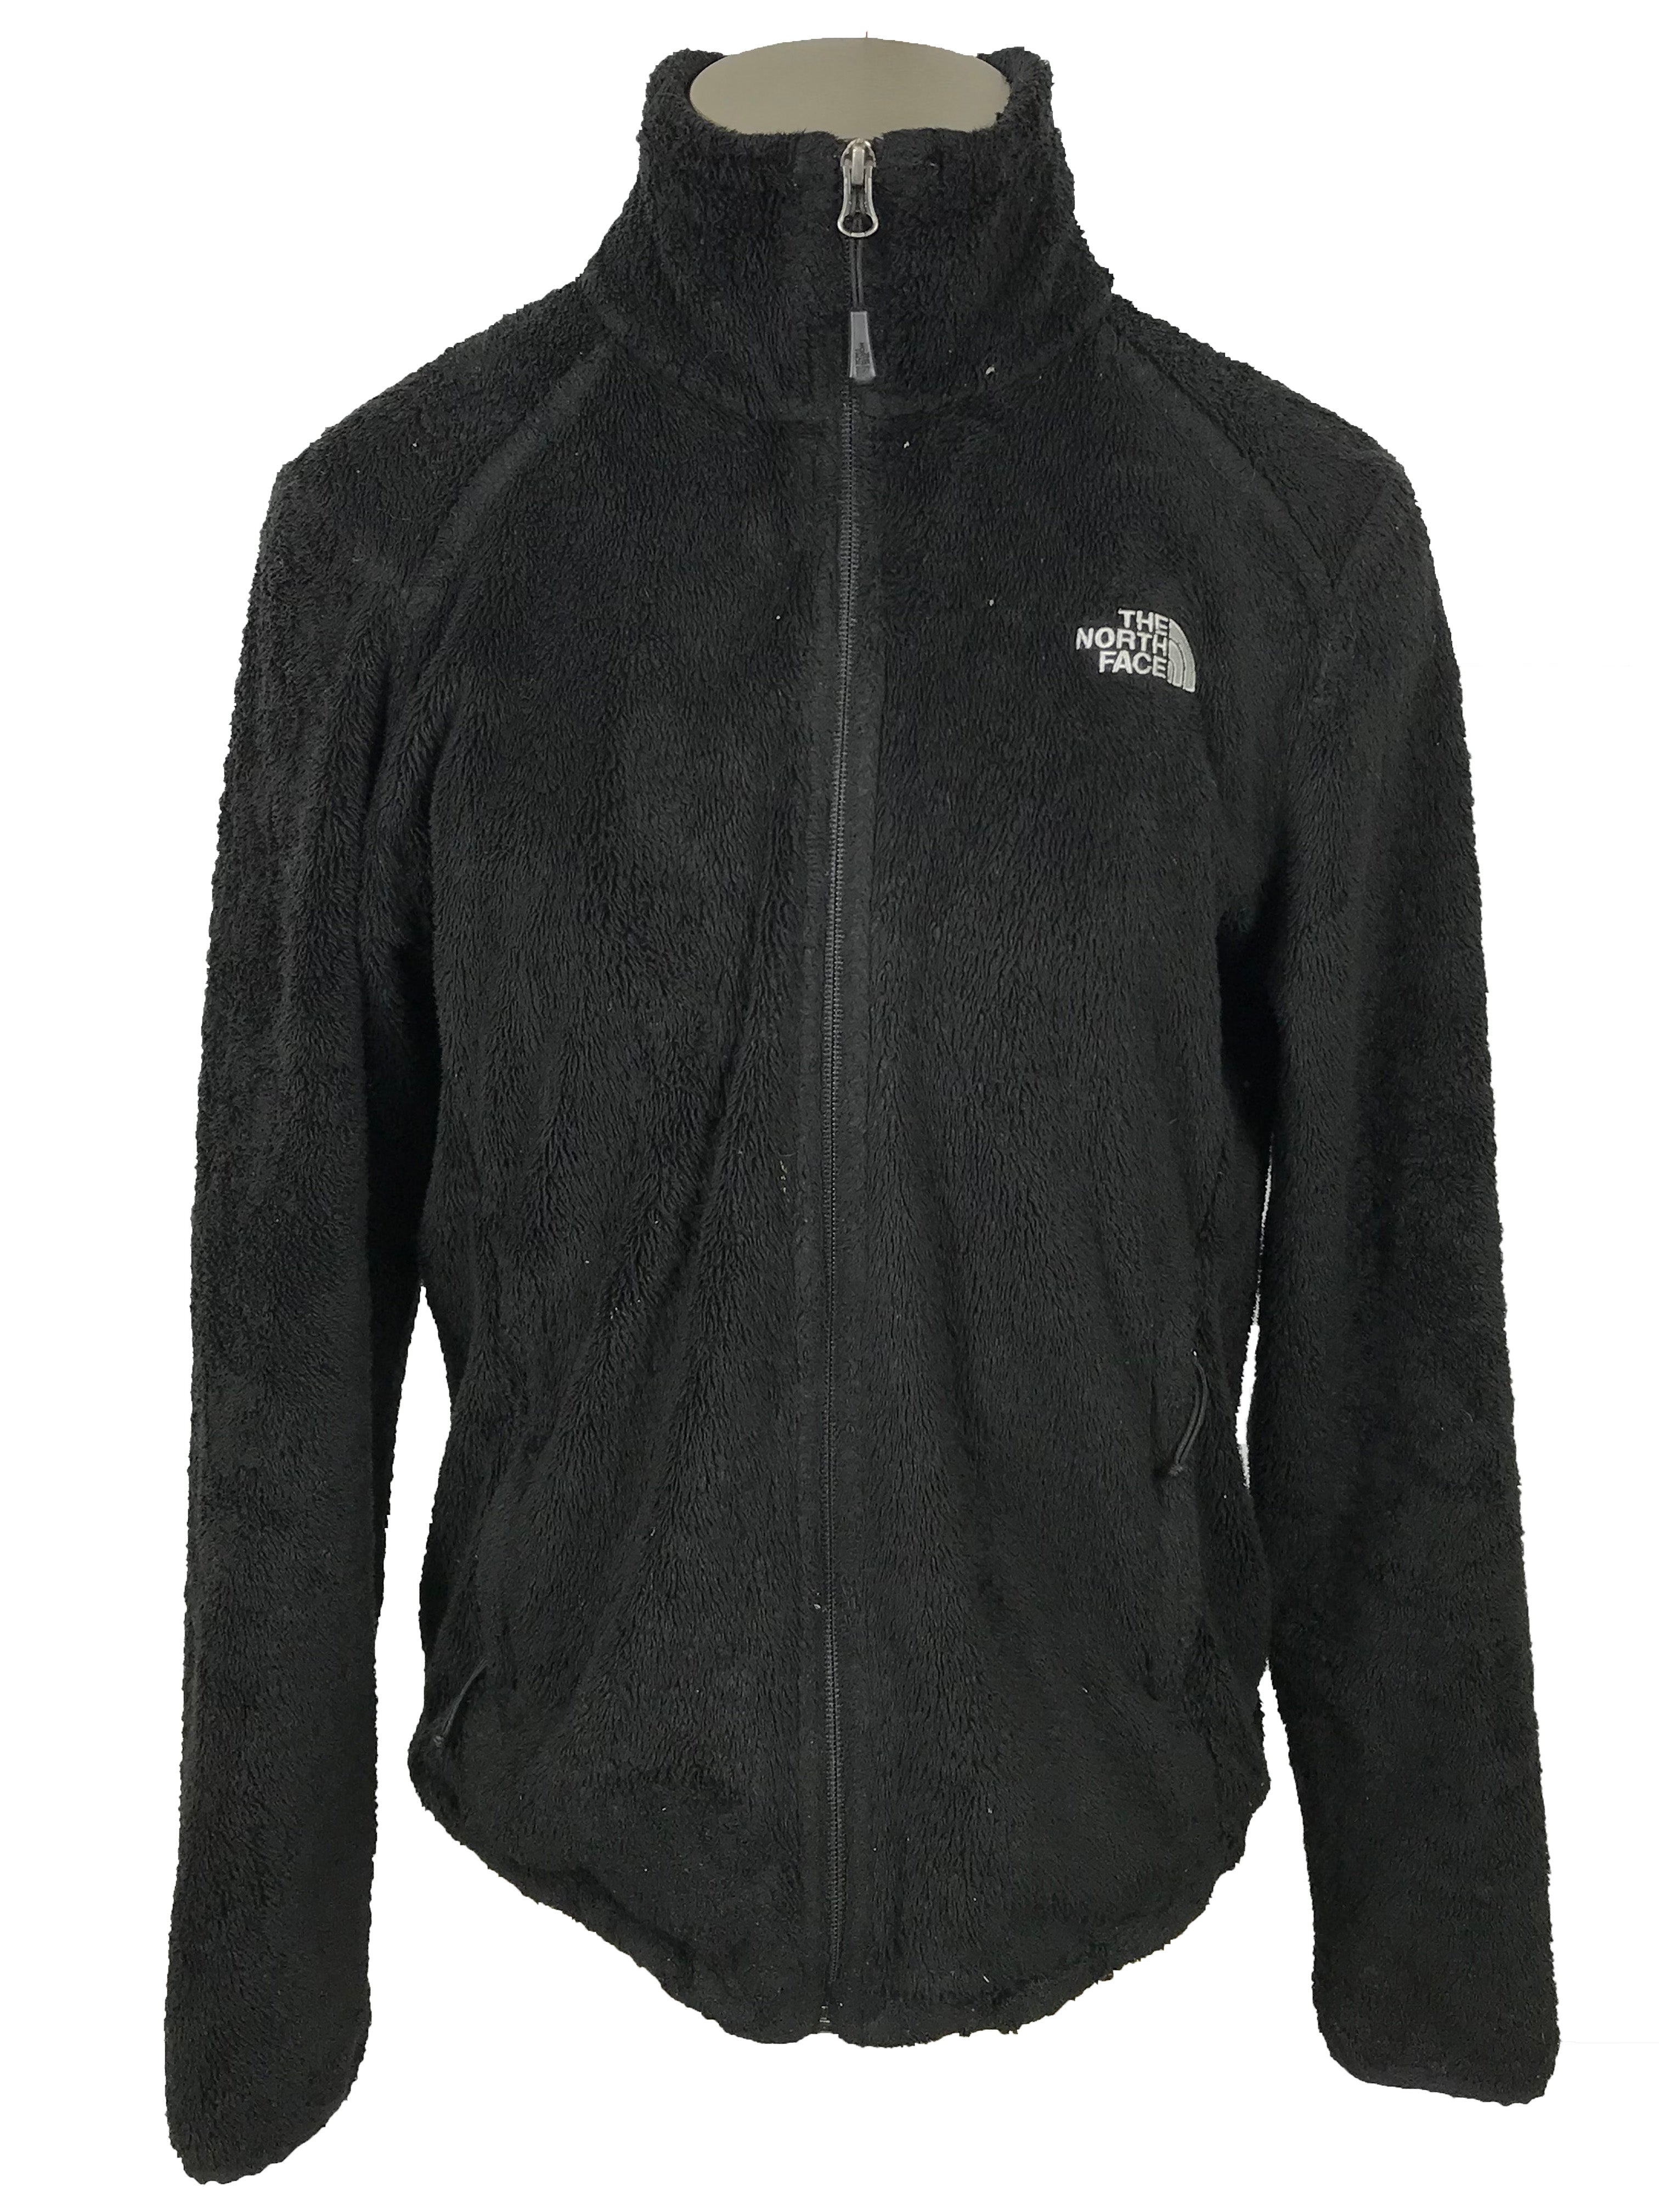 The North Face Black Fleece Zip-Up Jacket Women's Size Medium